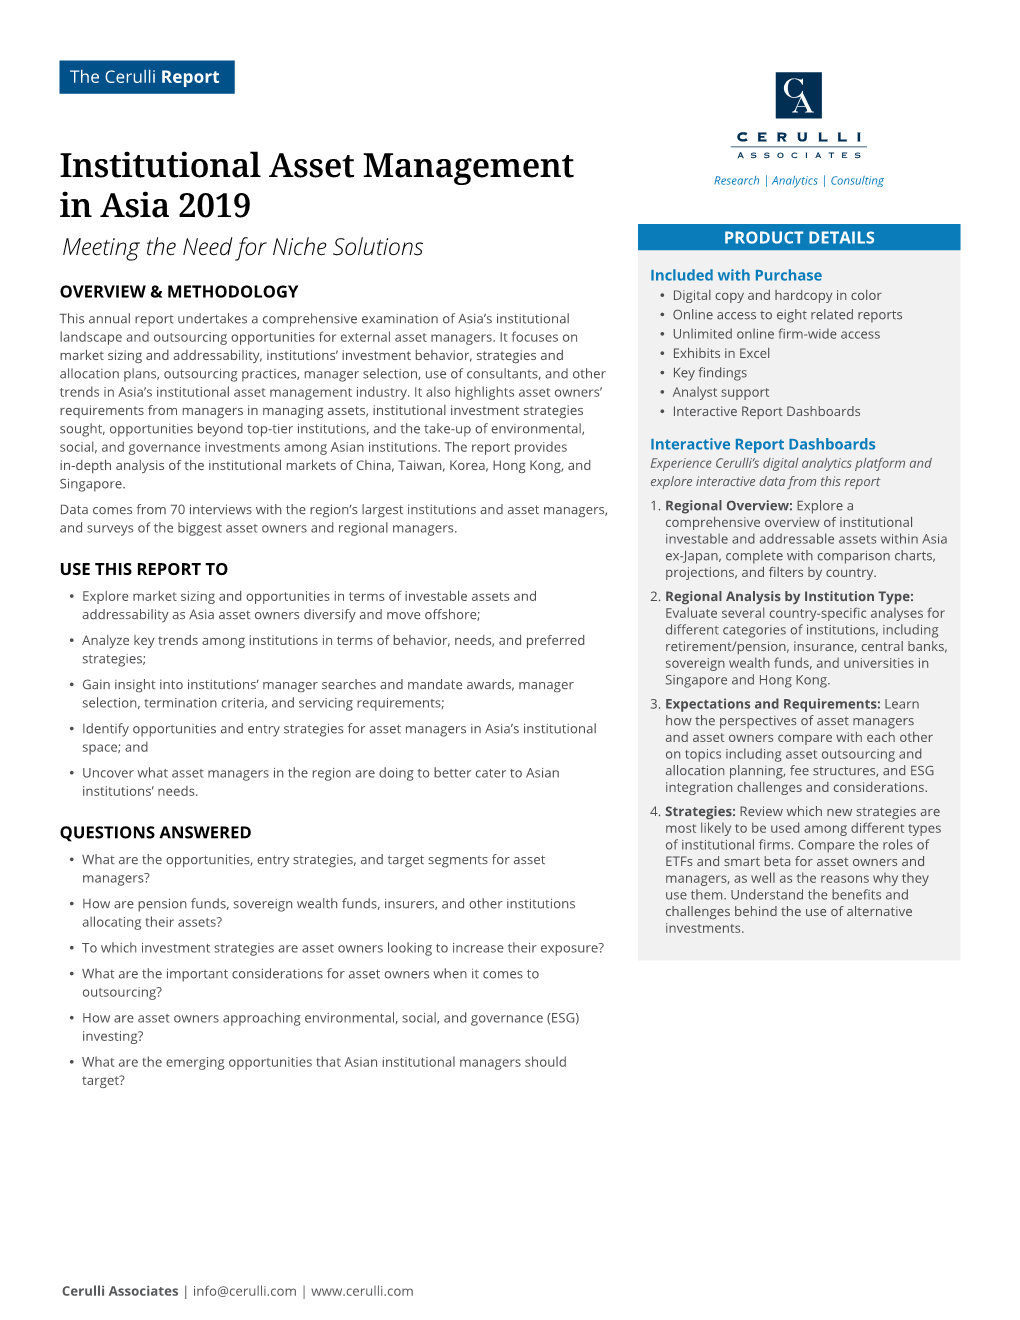 Institutional Asset Management in Asia 2019